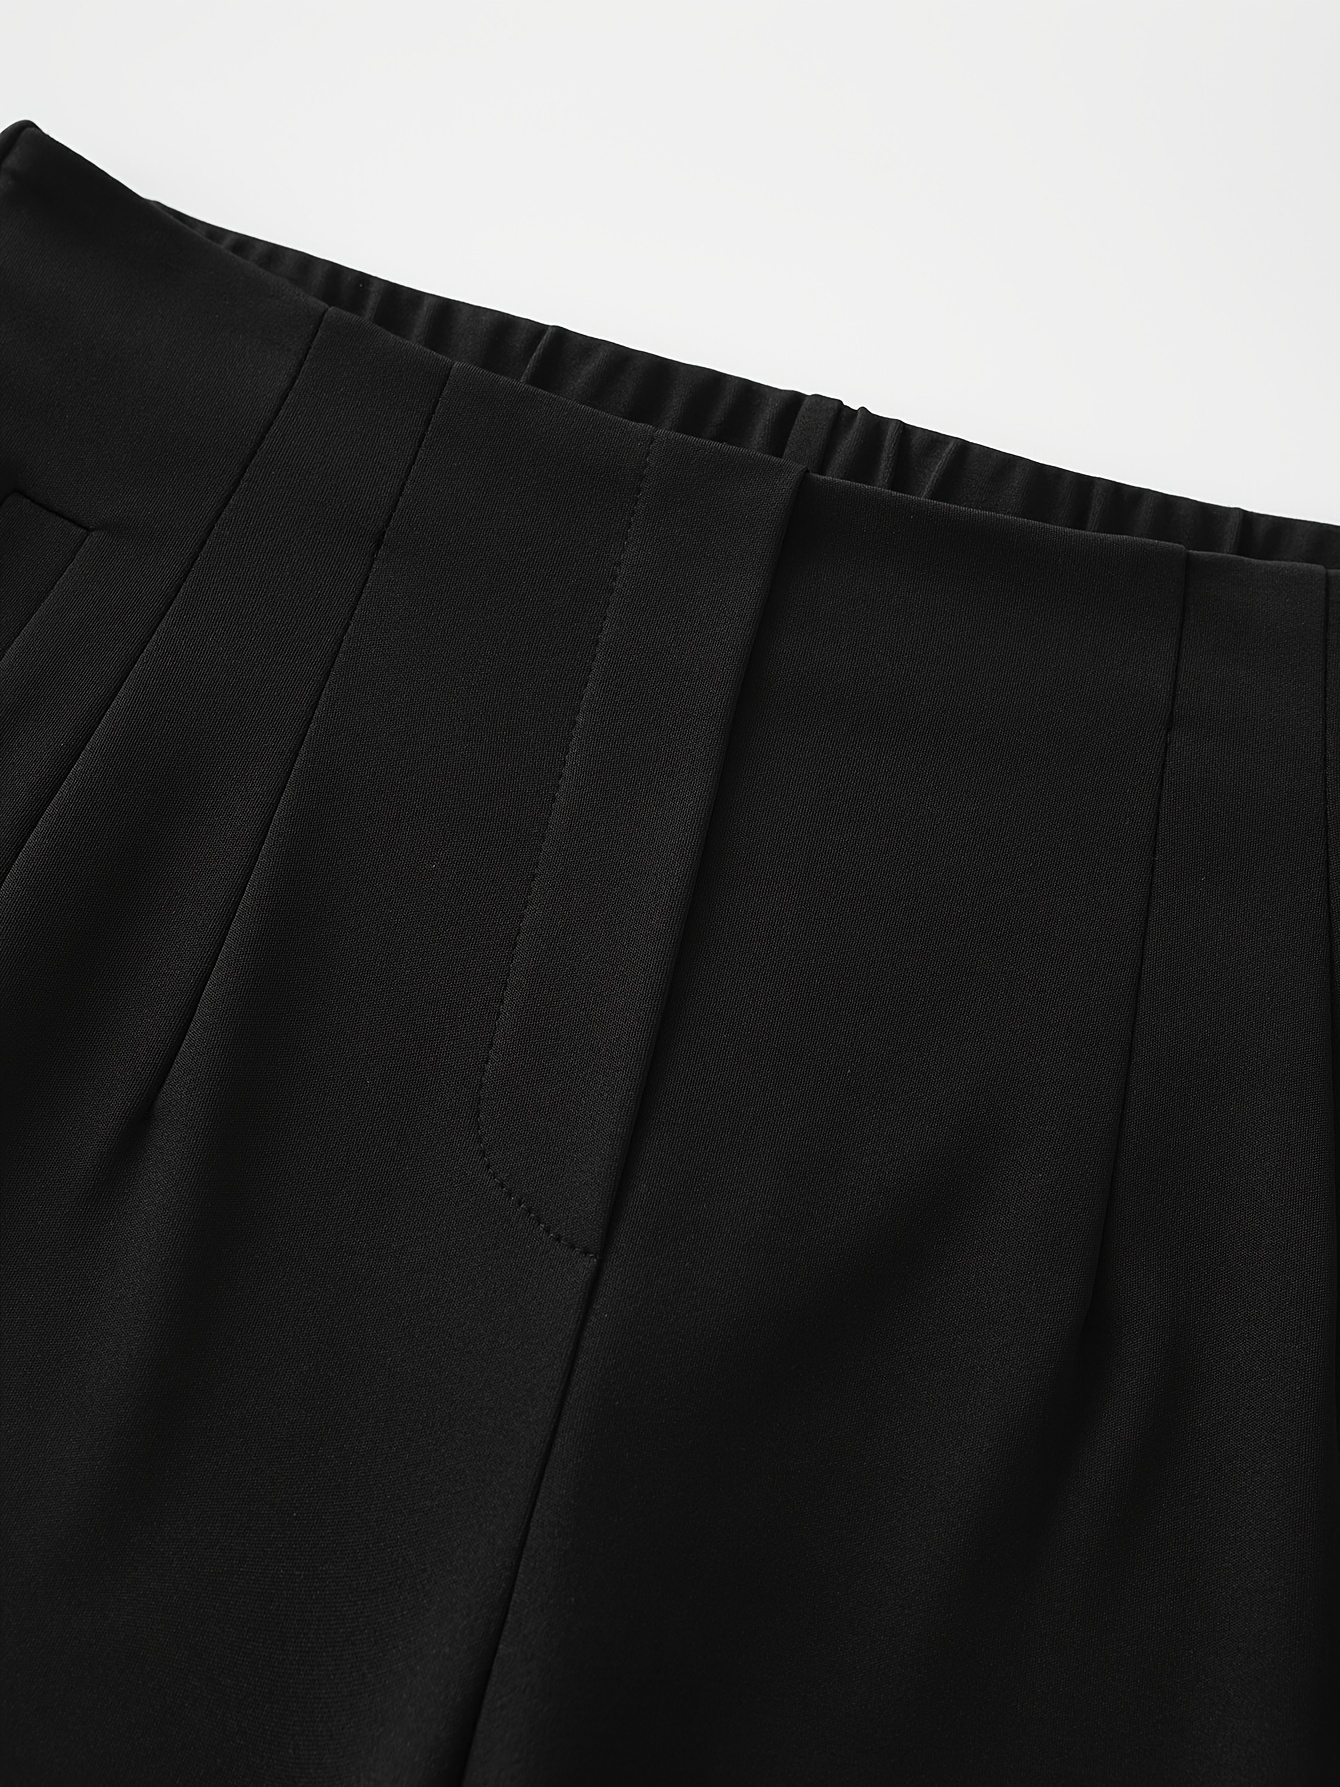 Women's Basic Elegant Pants Plus Size Solid Seam Detail High